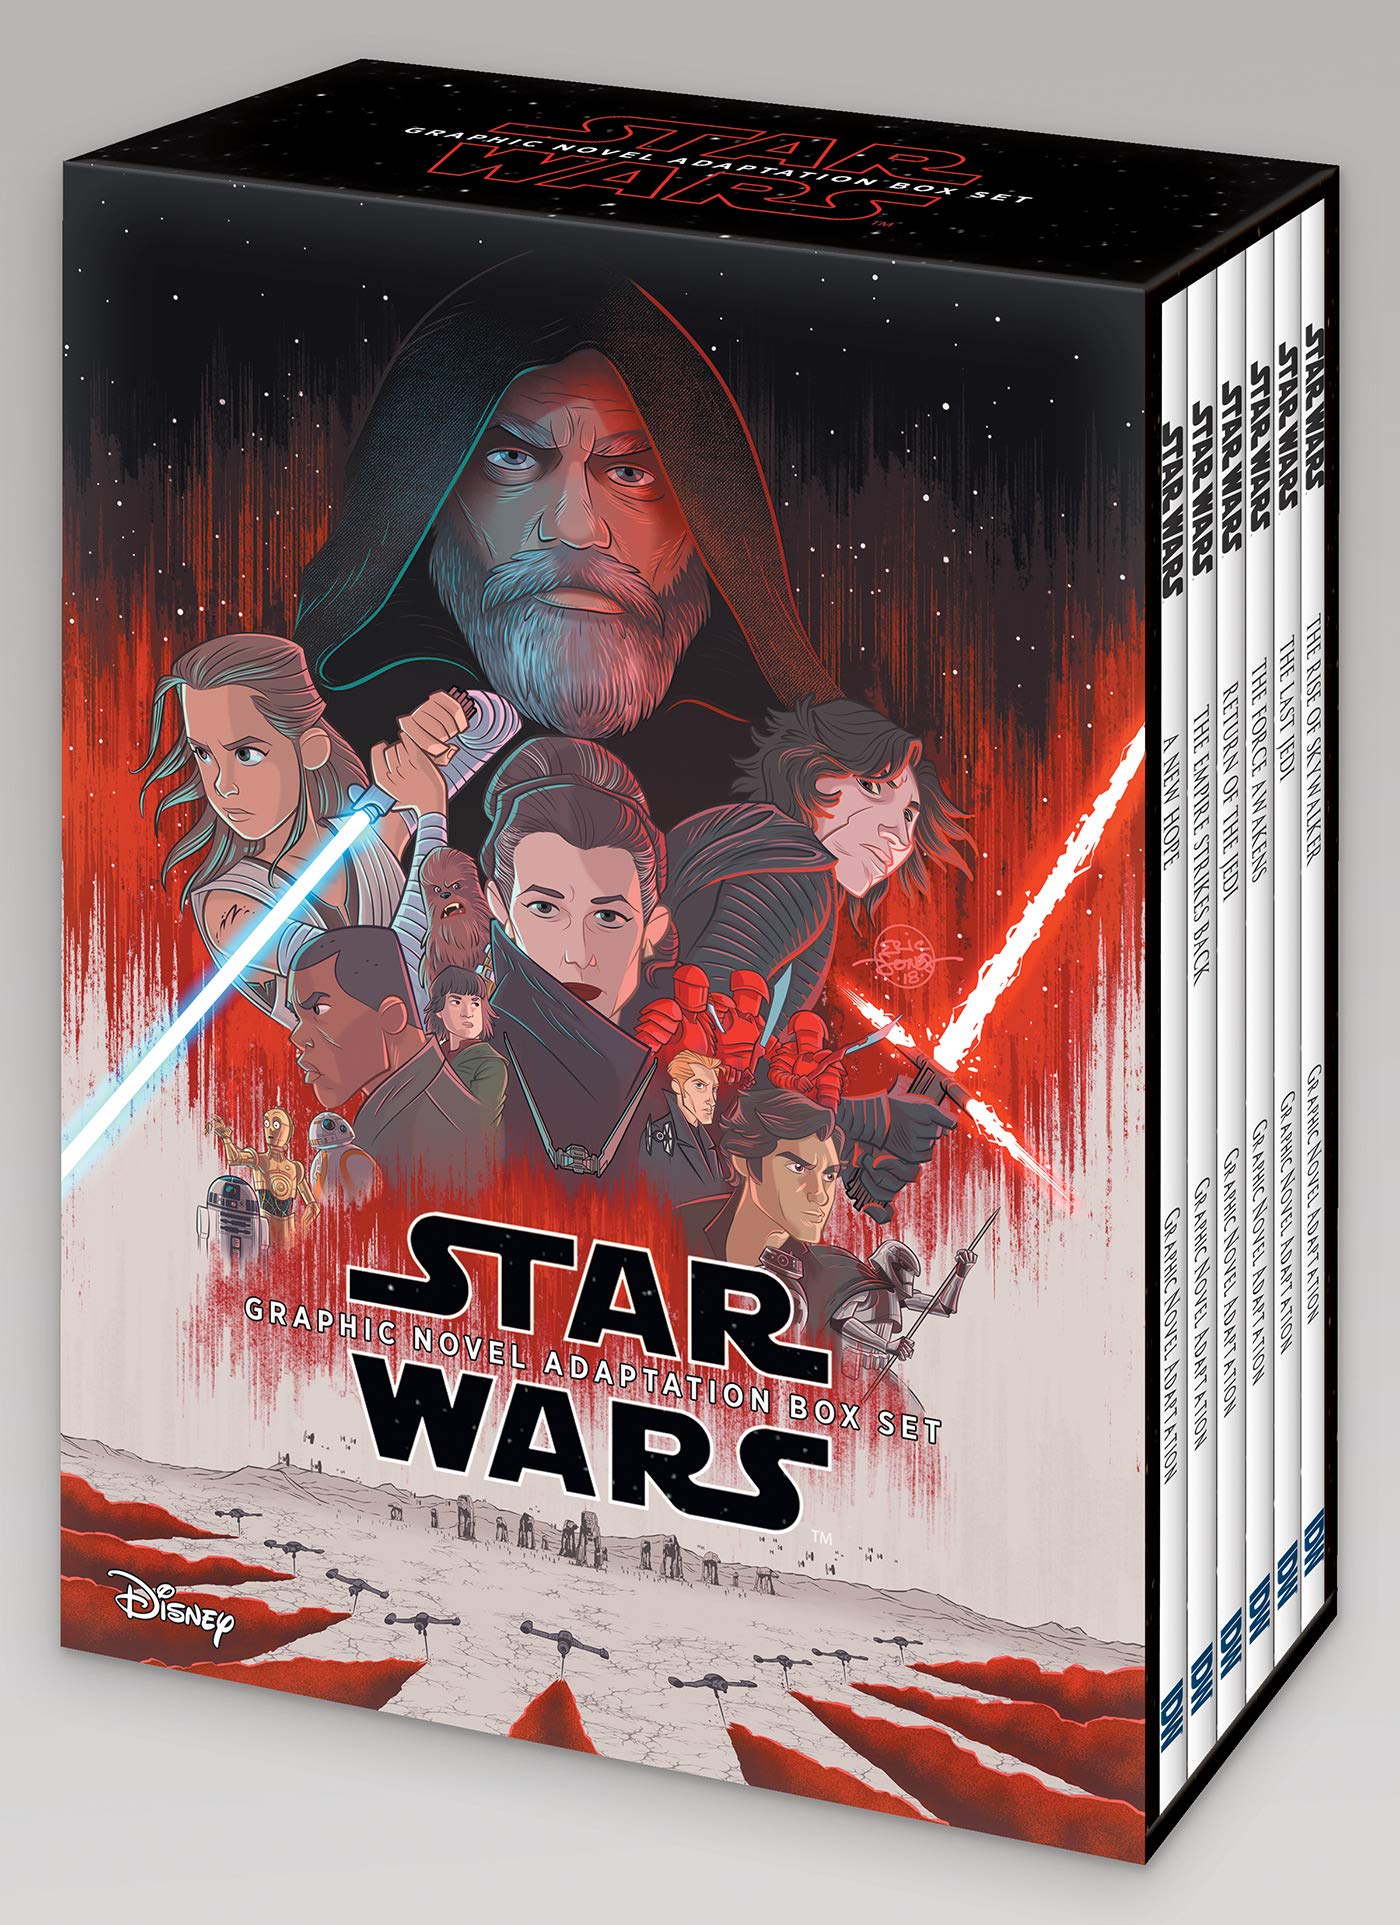 Star Wars Episodes IV–IX Graphic Novel Adaptation Box Set Paperback by Alessandro Ferrari (Author)